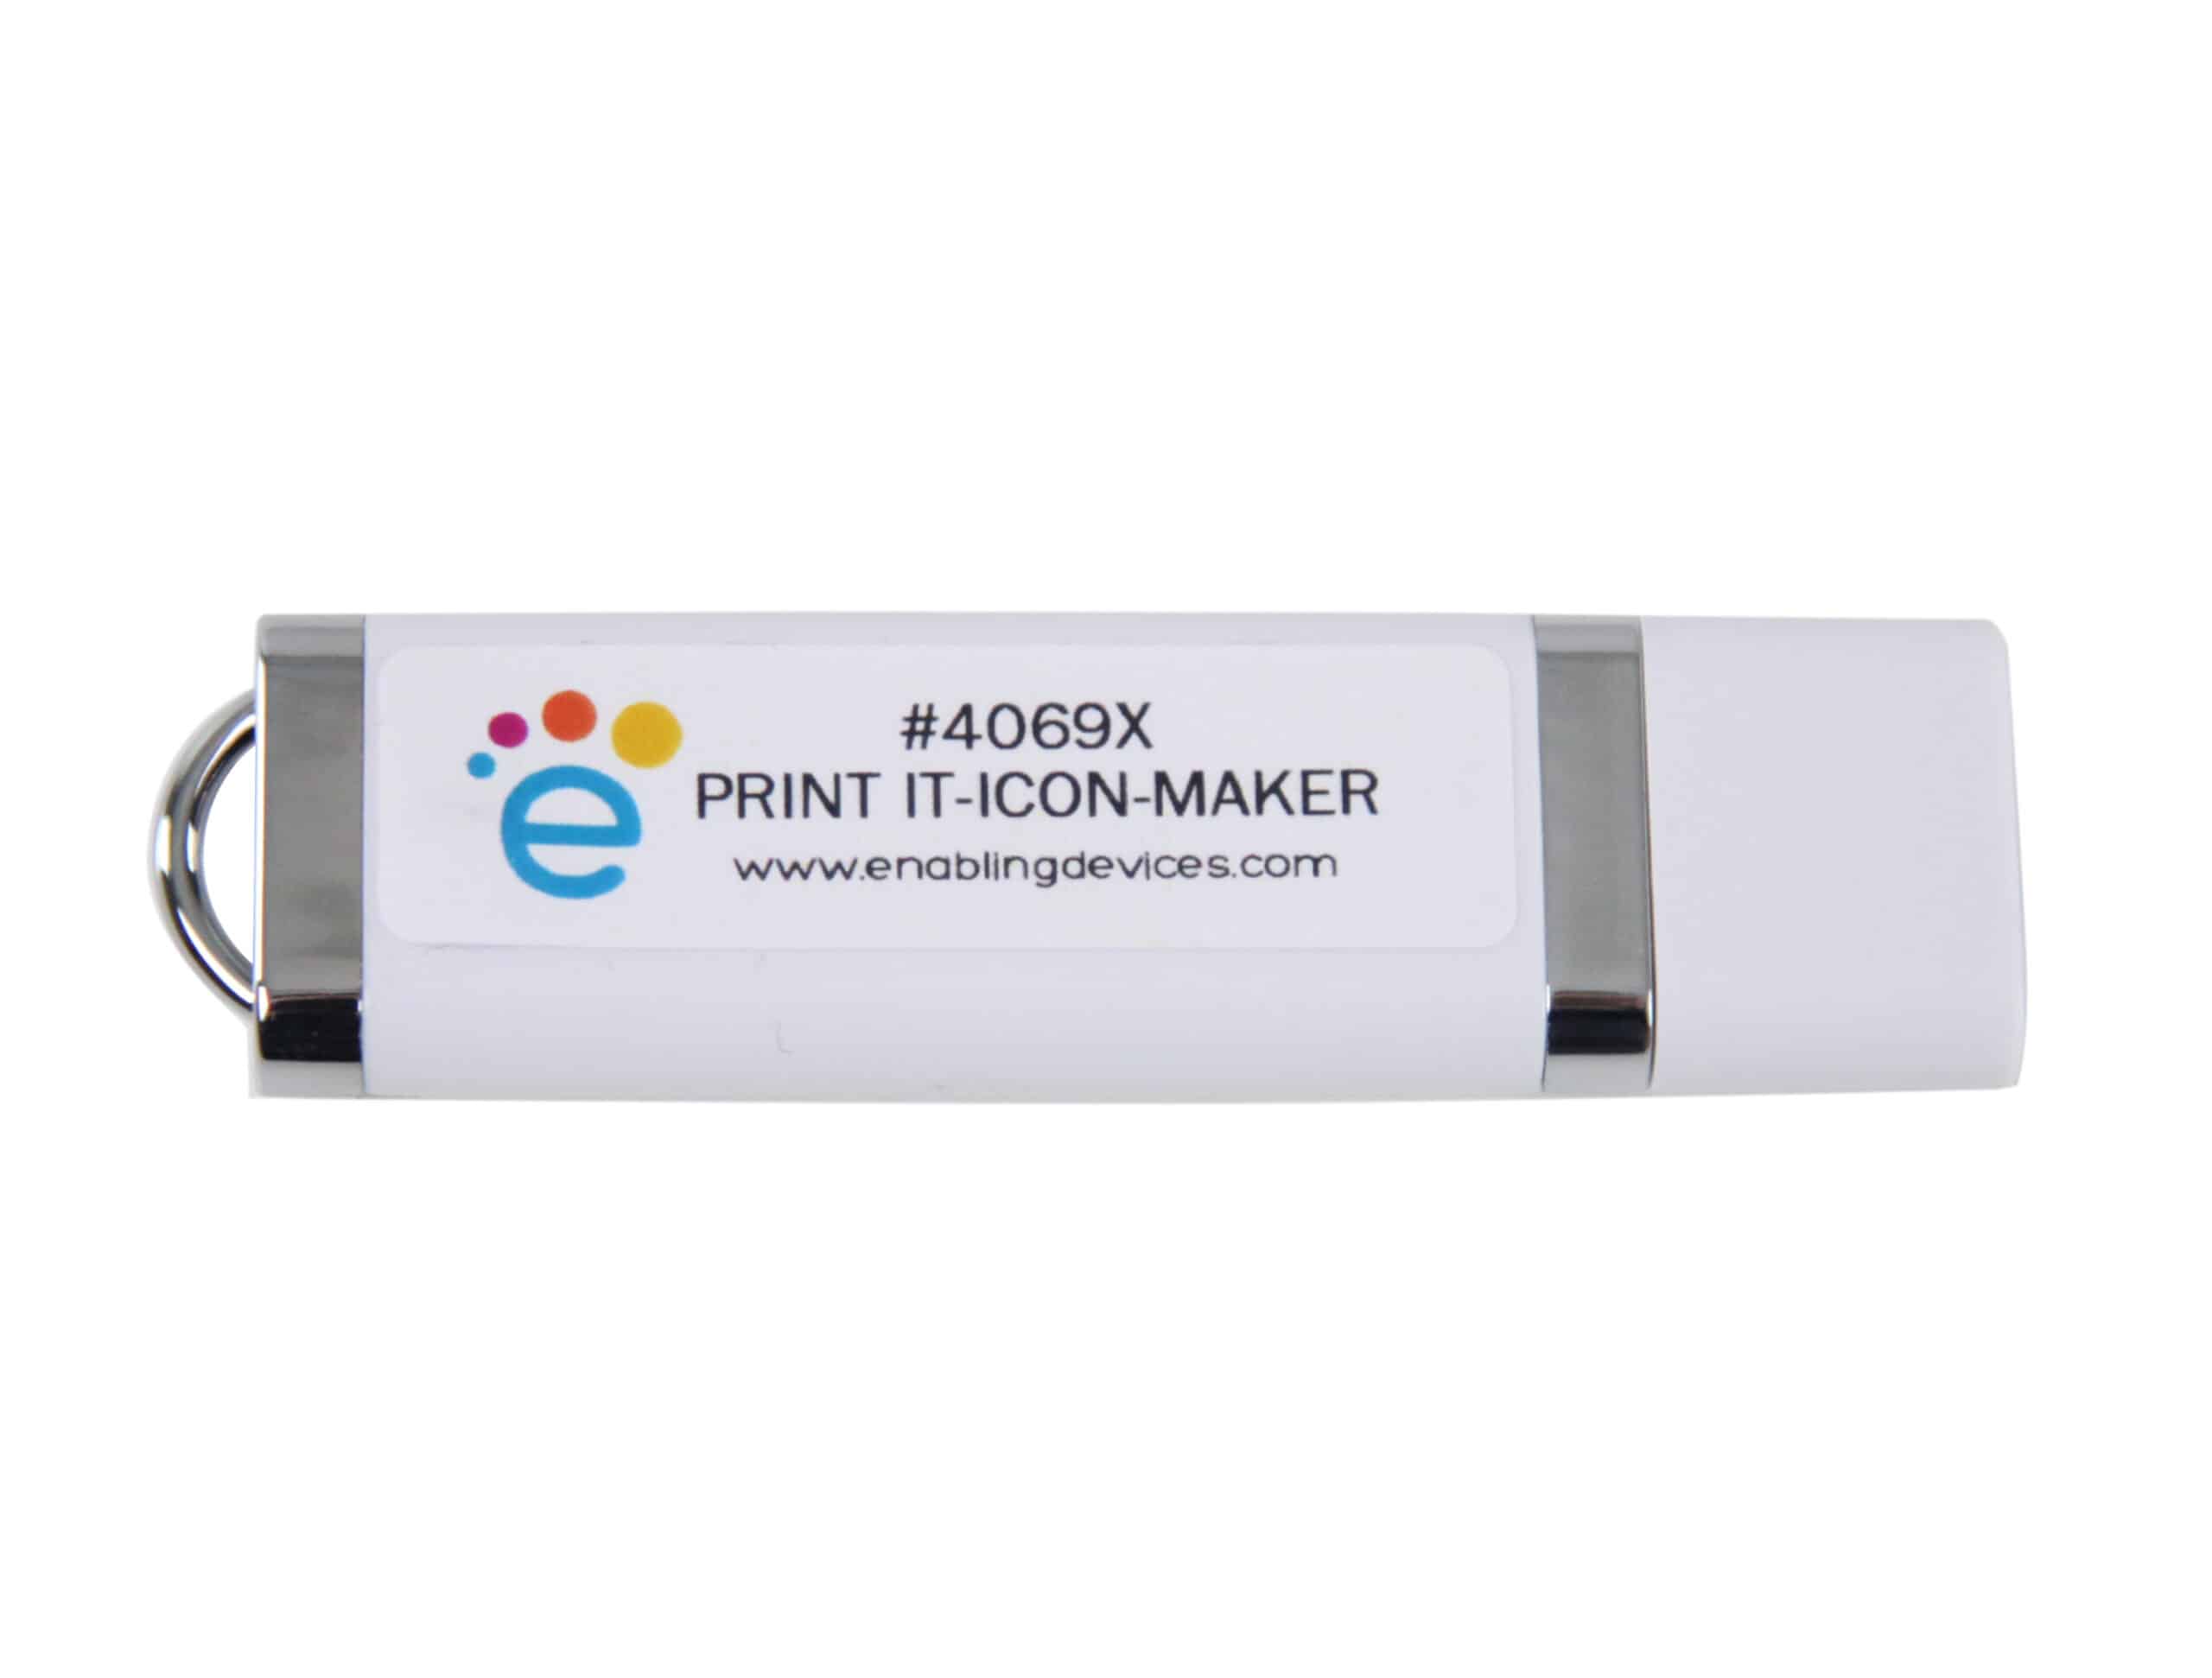 Enabling Print It! Icon Maker